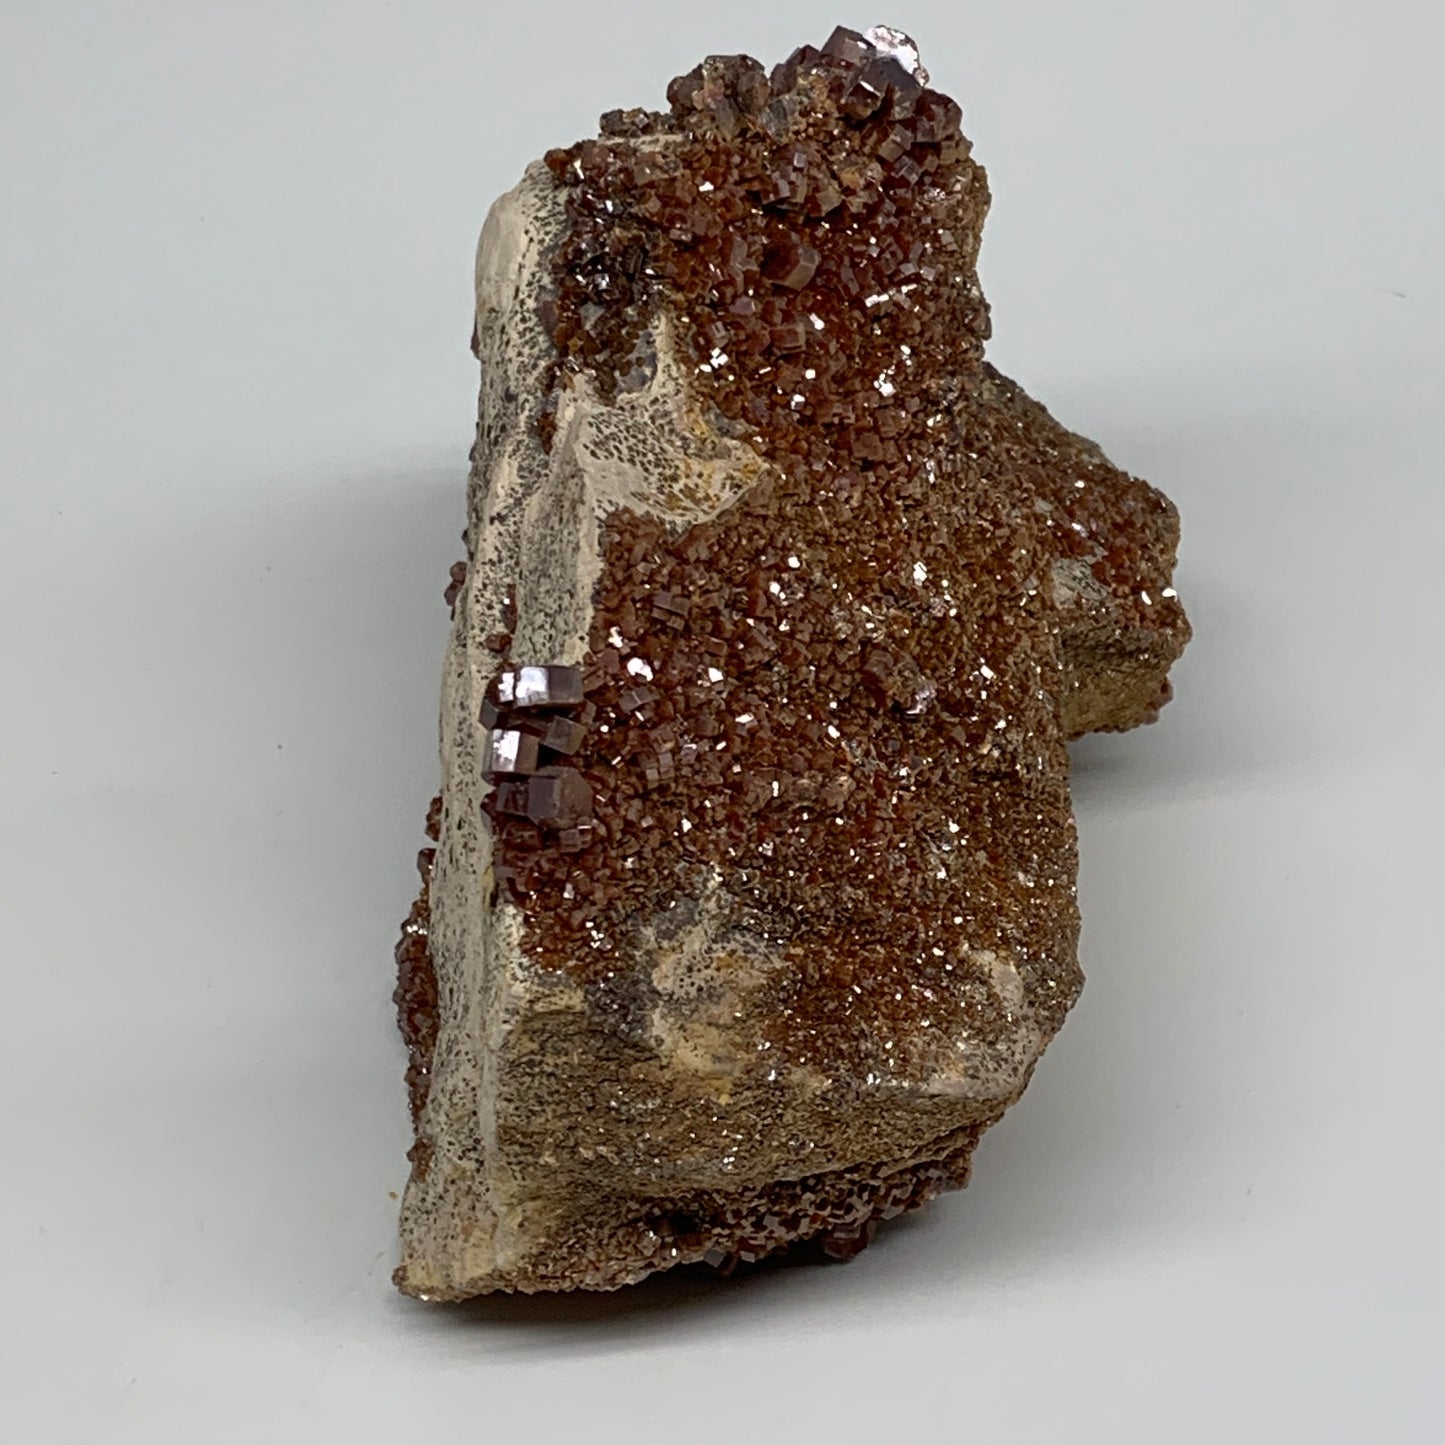 1958g, 6.5"x3.7"x4.2", Vanadinite Small Crystals Cluster Mineral Specimens, B111